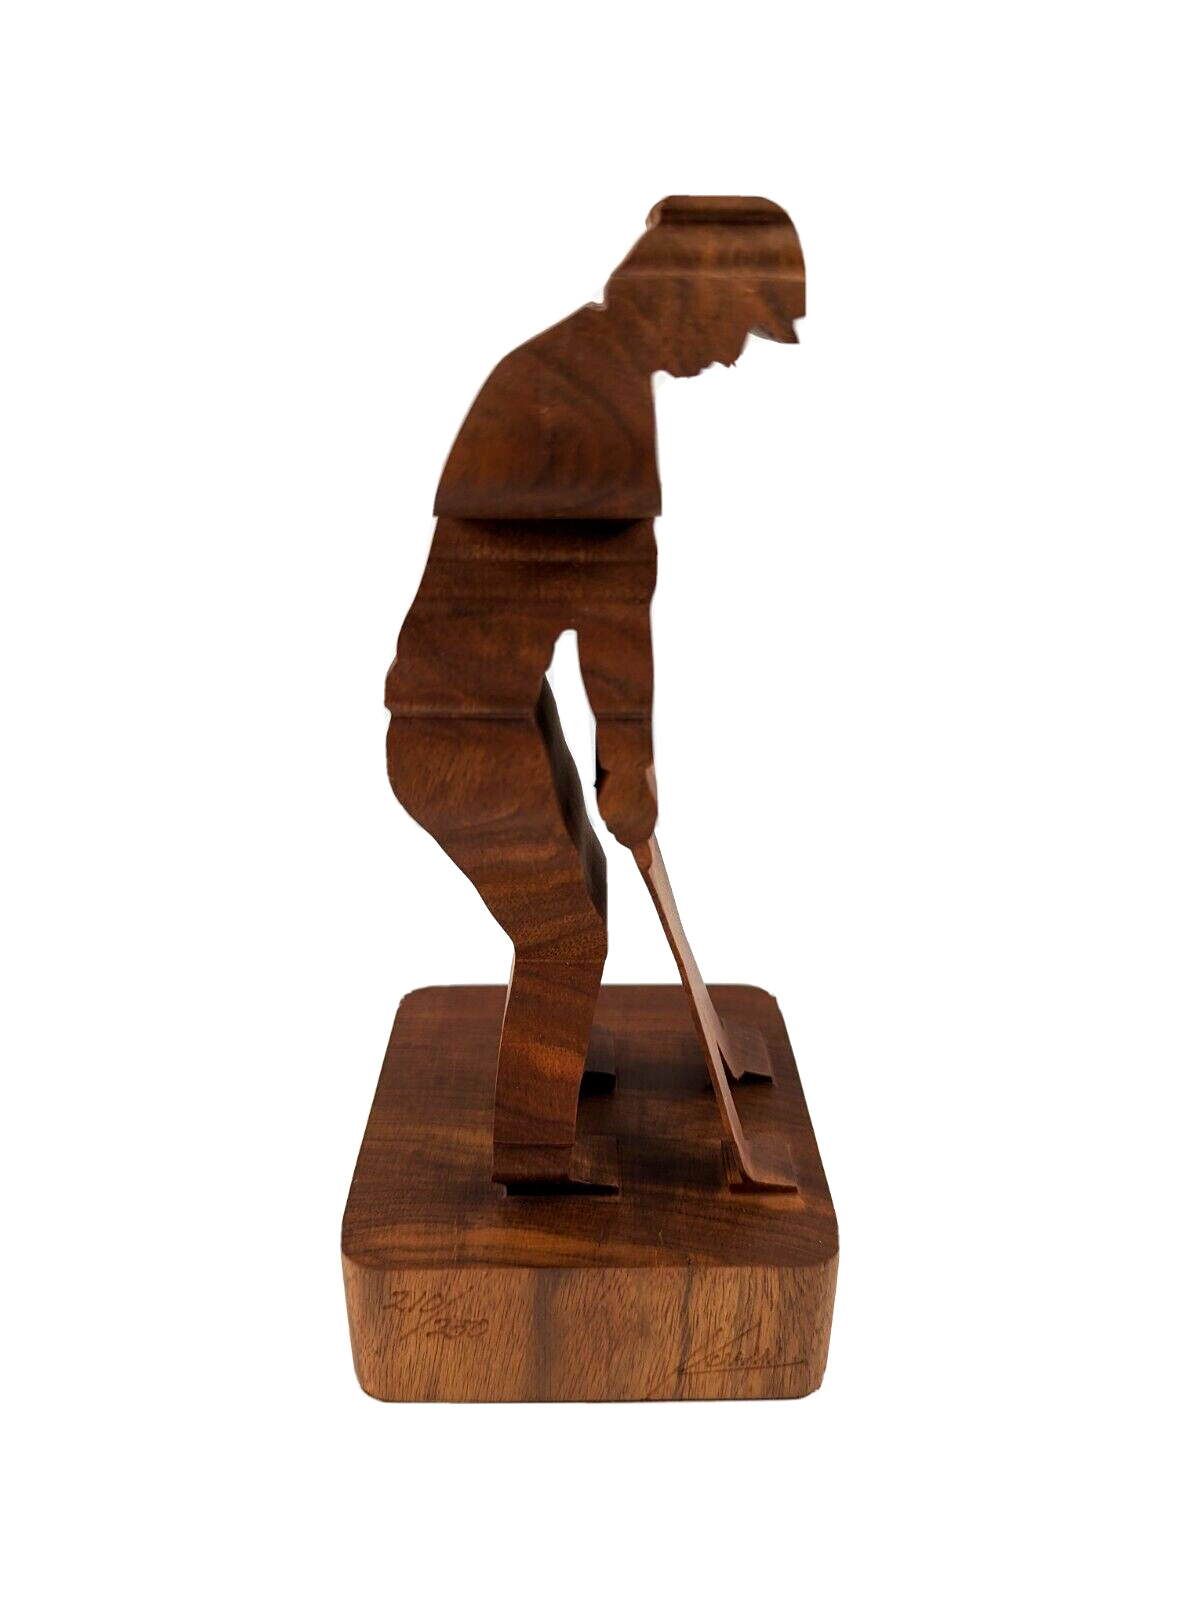 Signed Guillermo Kuhn Sanchez 3d Golf Putting Art Wood Sculpture 210/250 Vintage